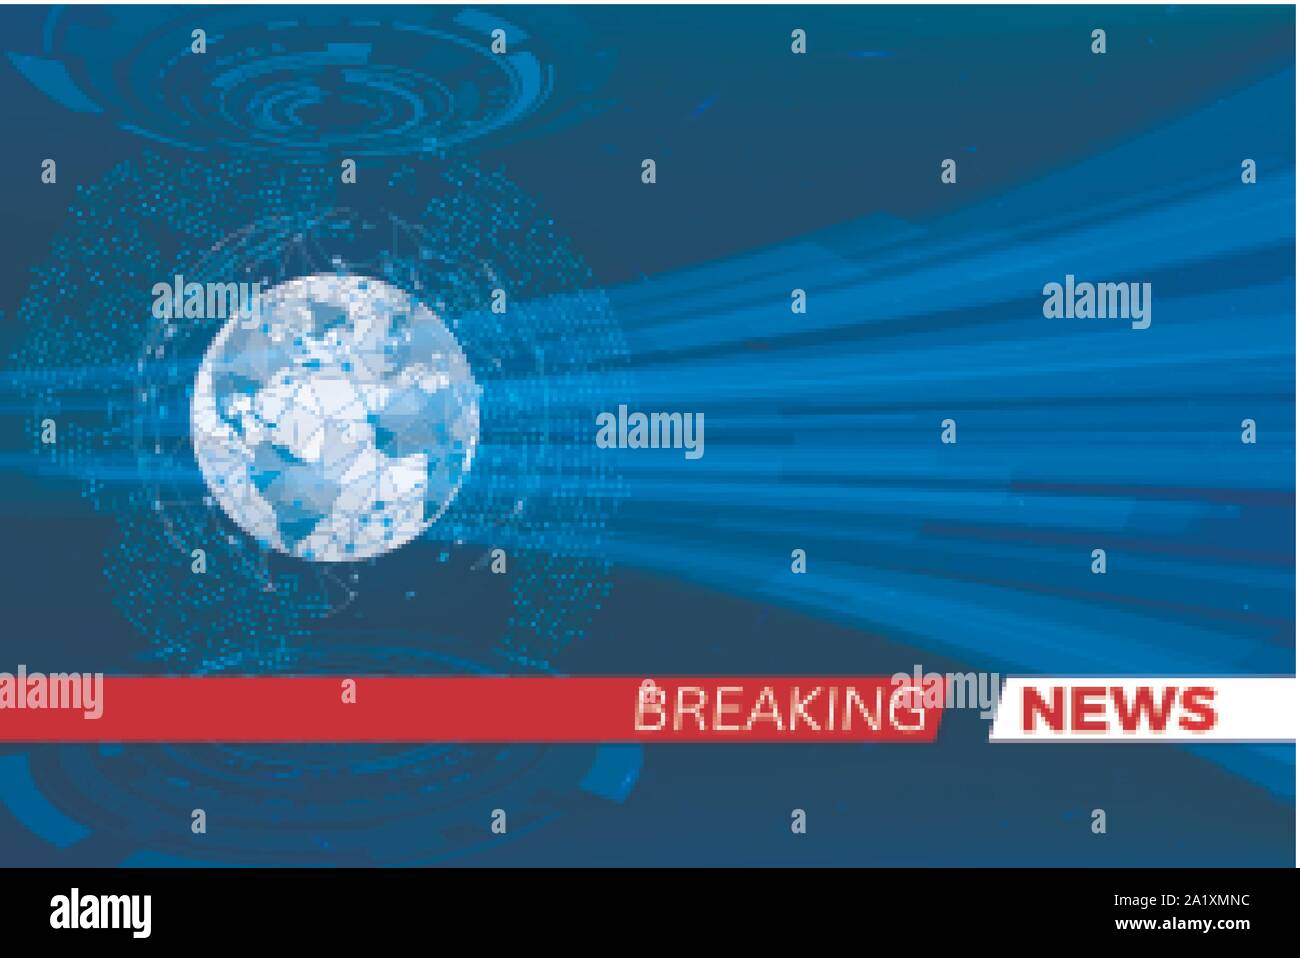 Breaking News background. Breaking news studio template. Vector illustration Stock Vector